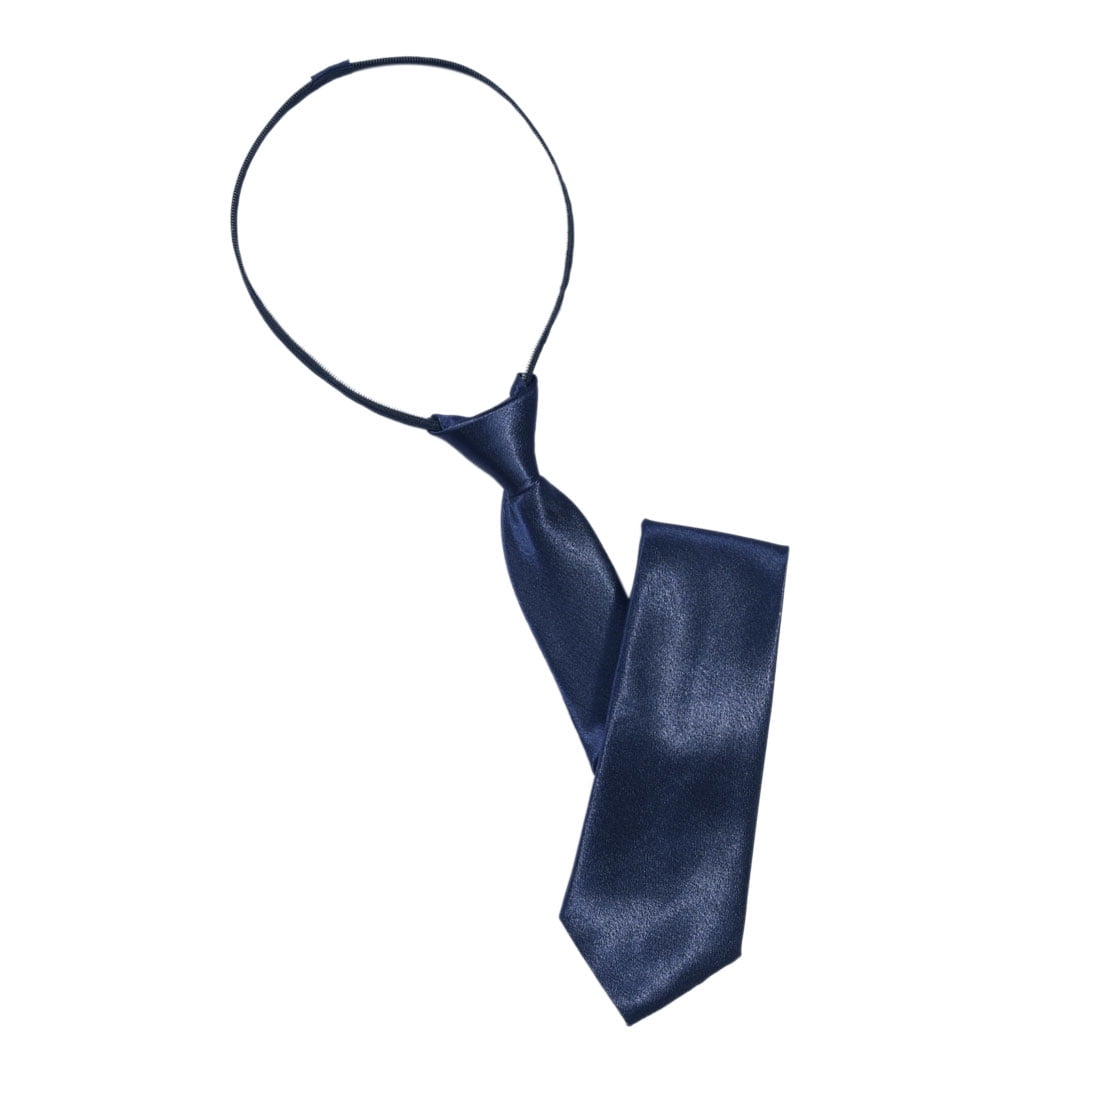 Details about   Fashion Men's Tie Zipper Necktie Solid Casual Business Slim Zip Up Neck Ties CF 